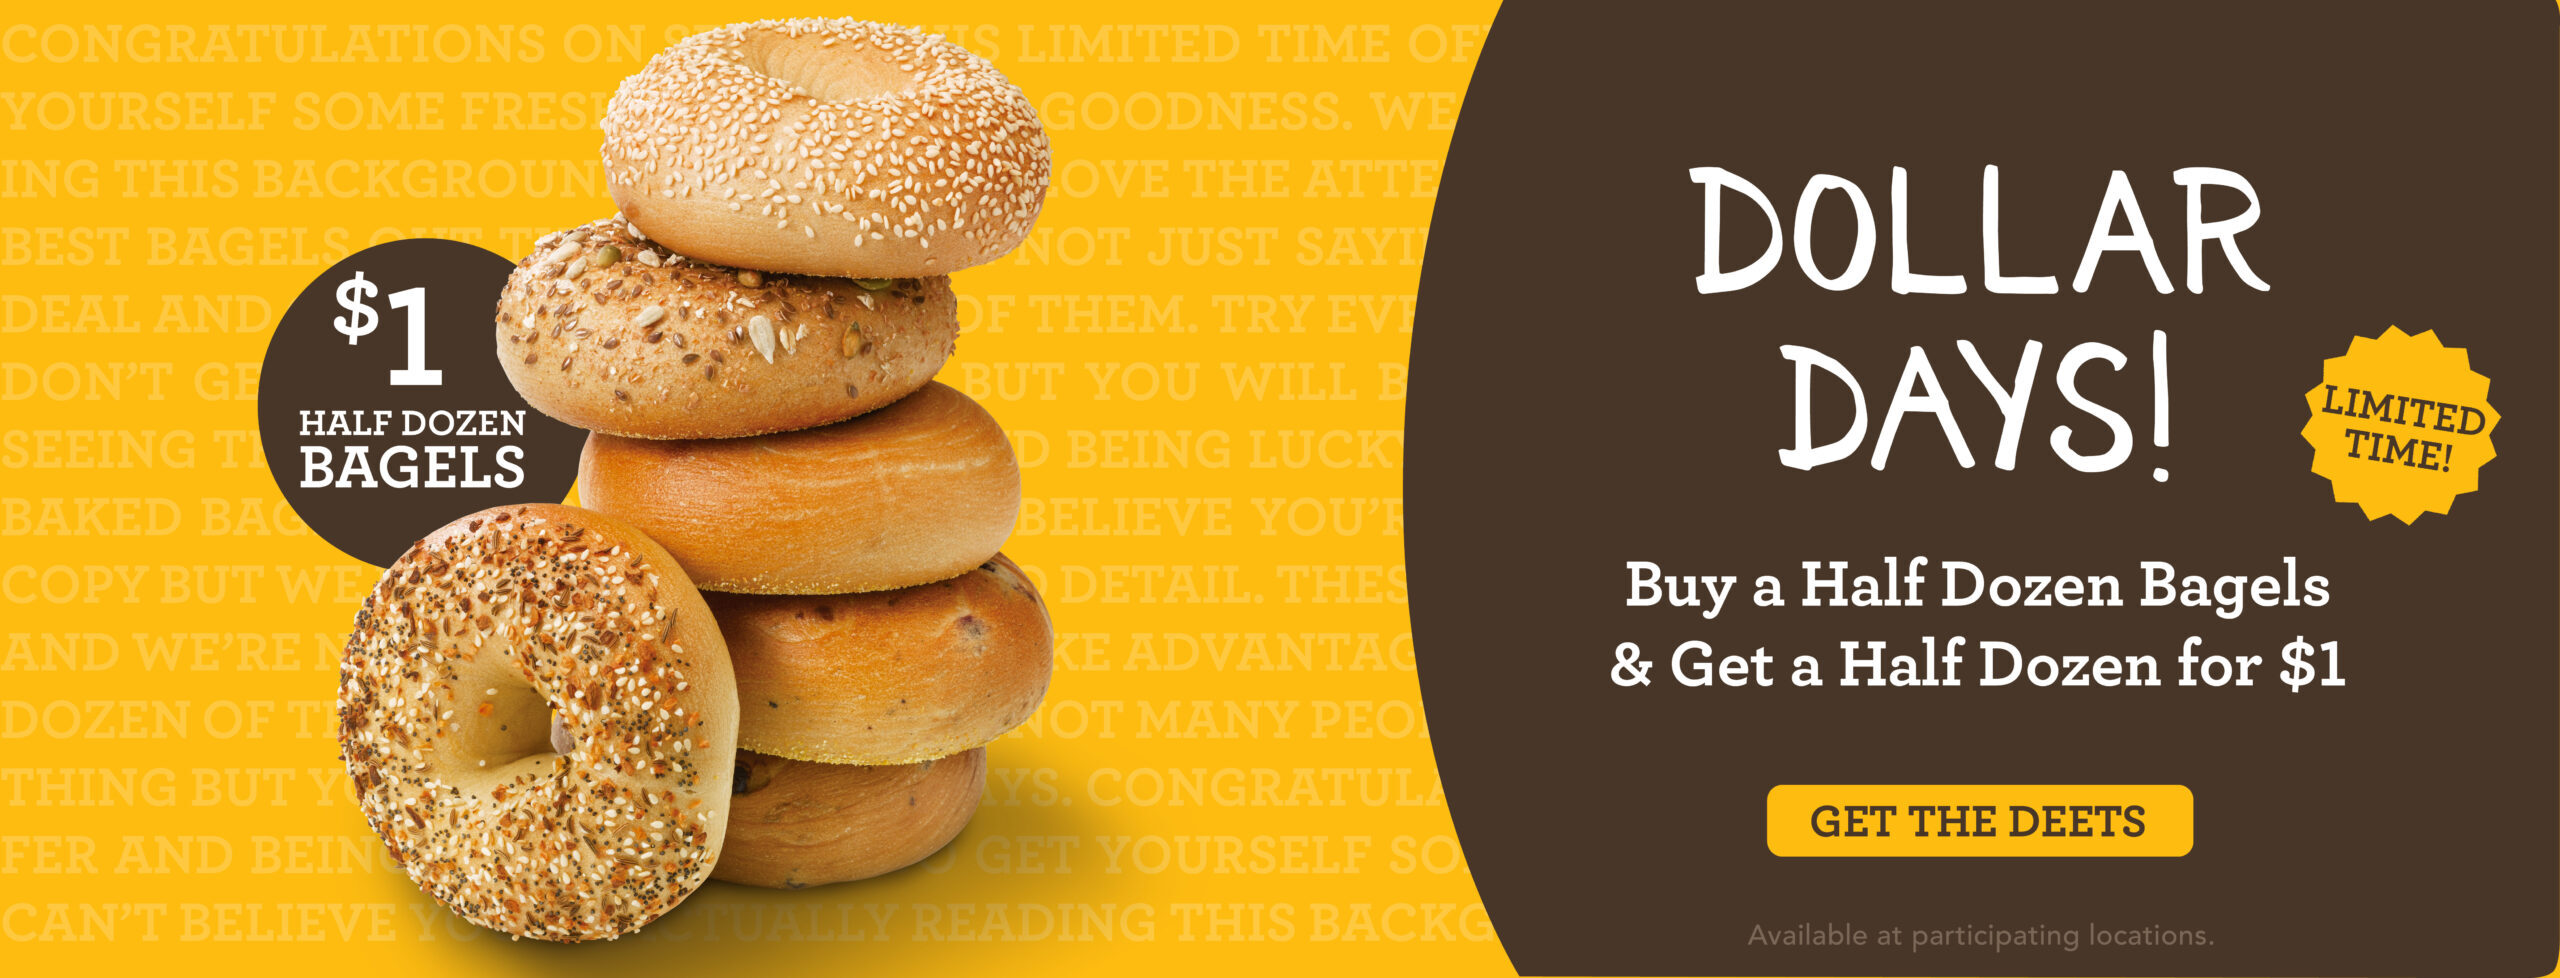 Dollar Days! Buy a half dozen bagels and get a half dozen for $1. Get The Deets.